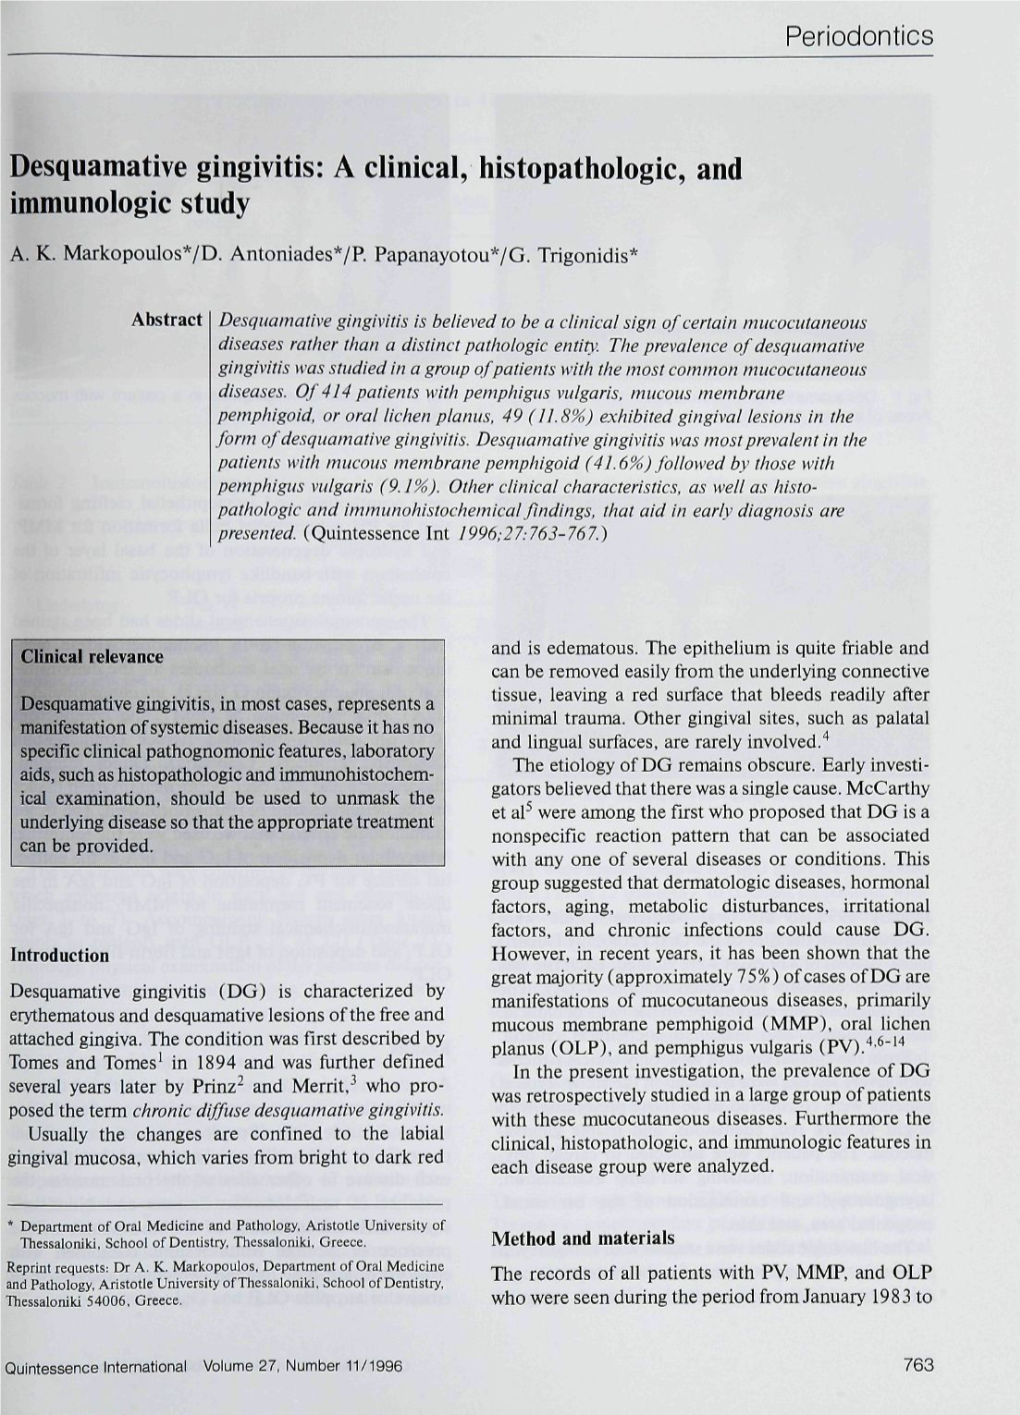 Desquamative Gingivitis: a Clinical, Histopathoiogic, and Immunologie Study